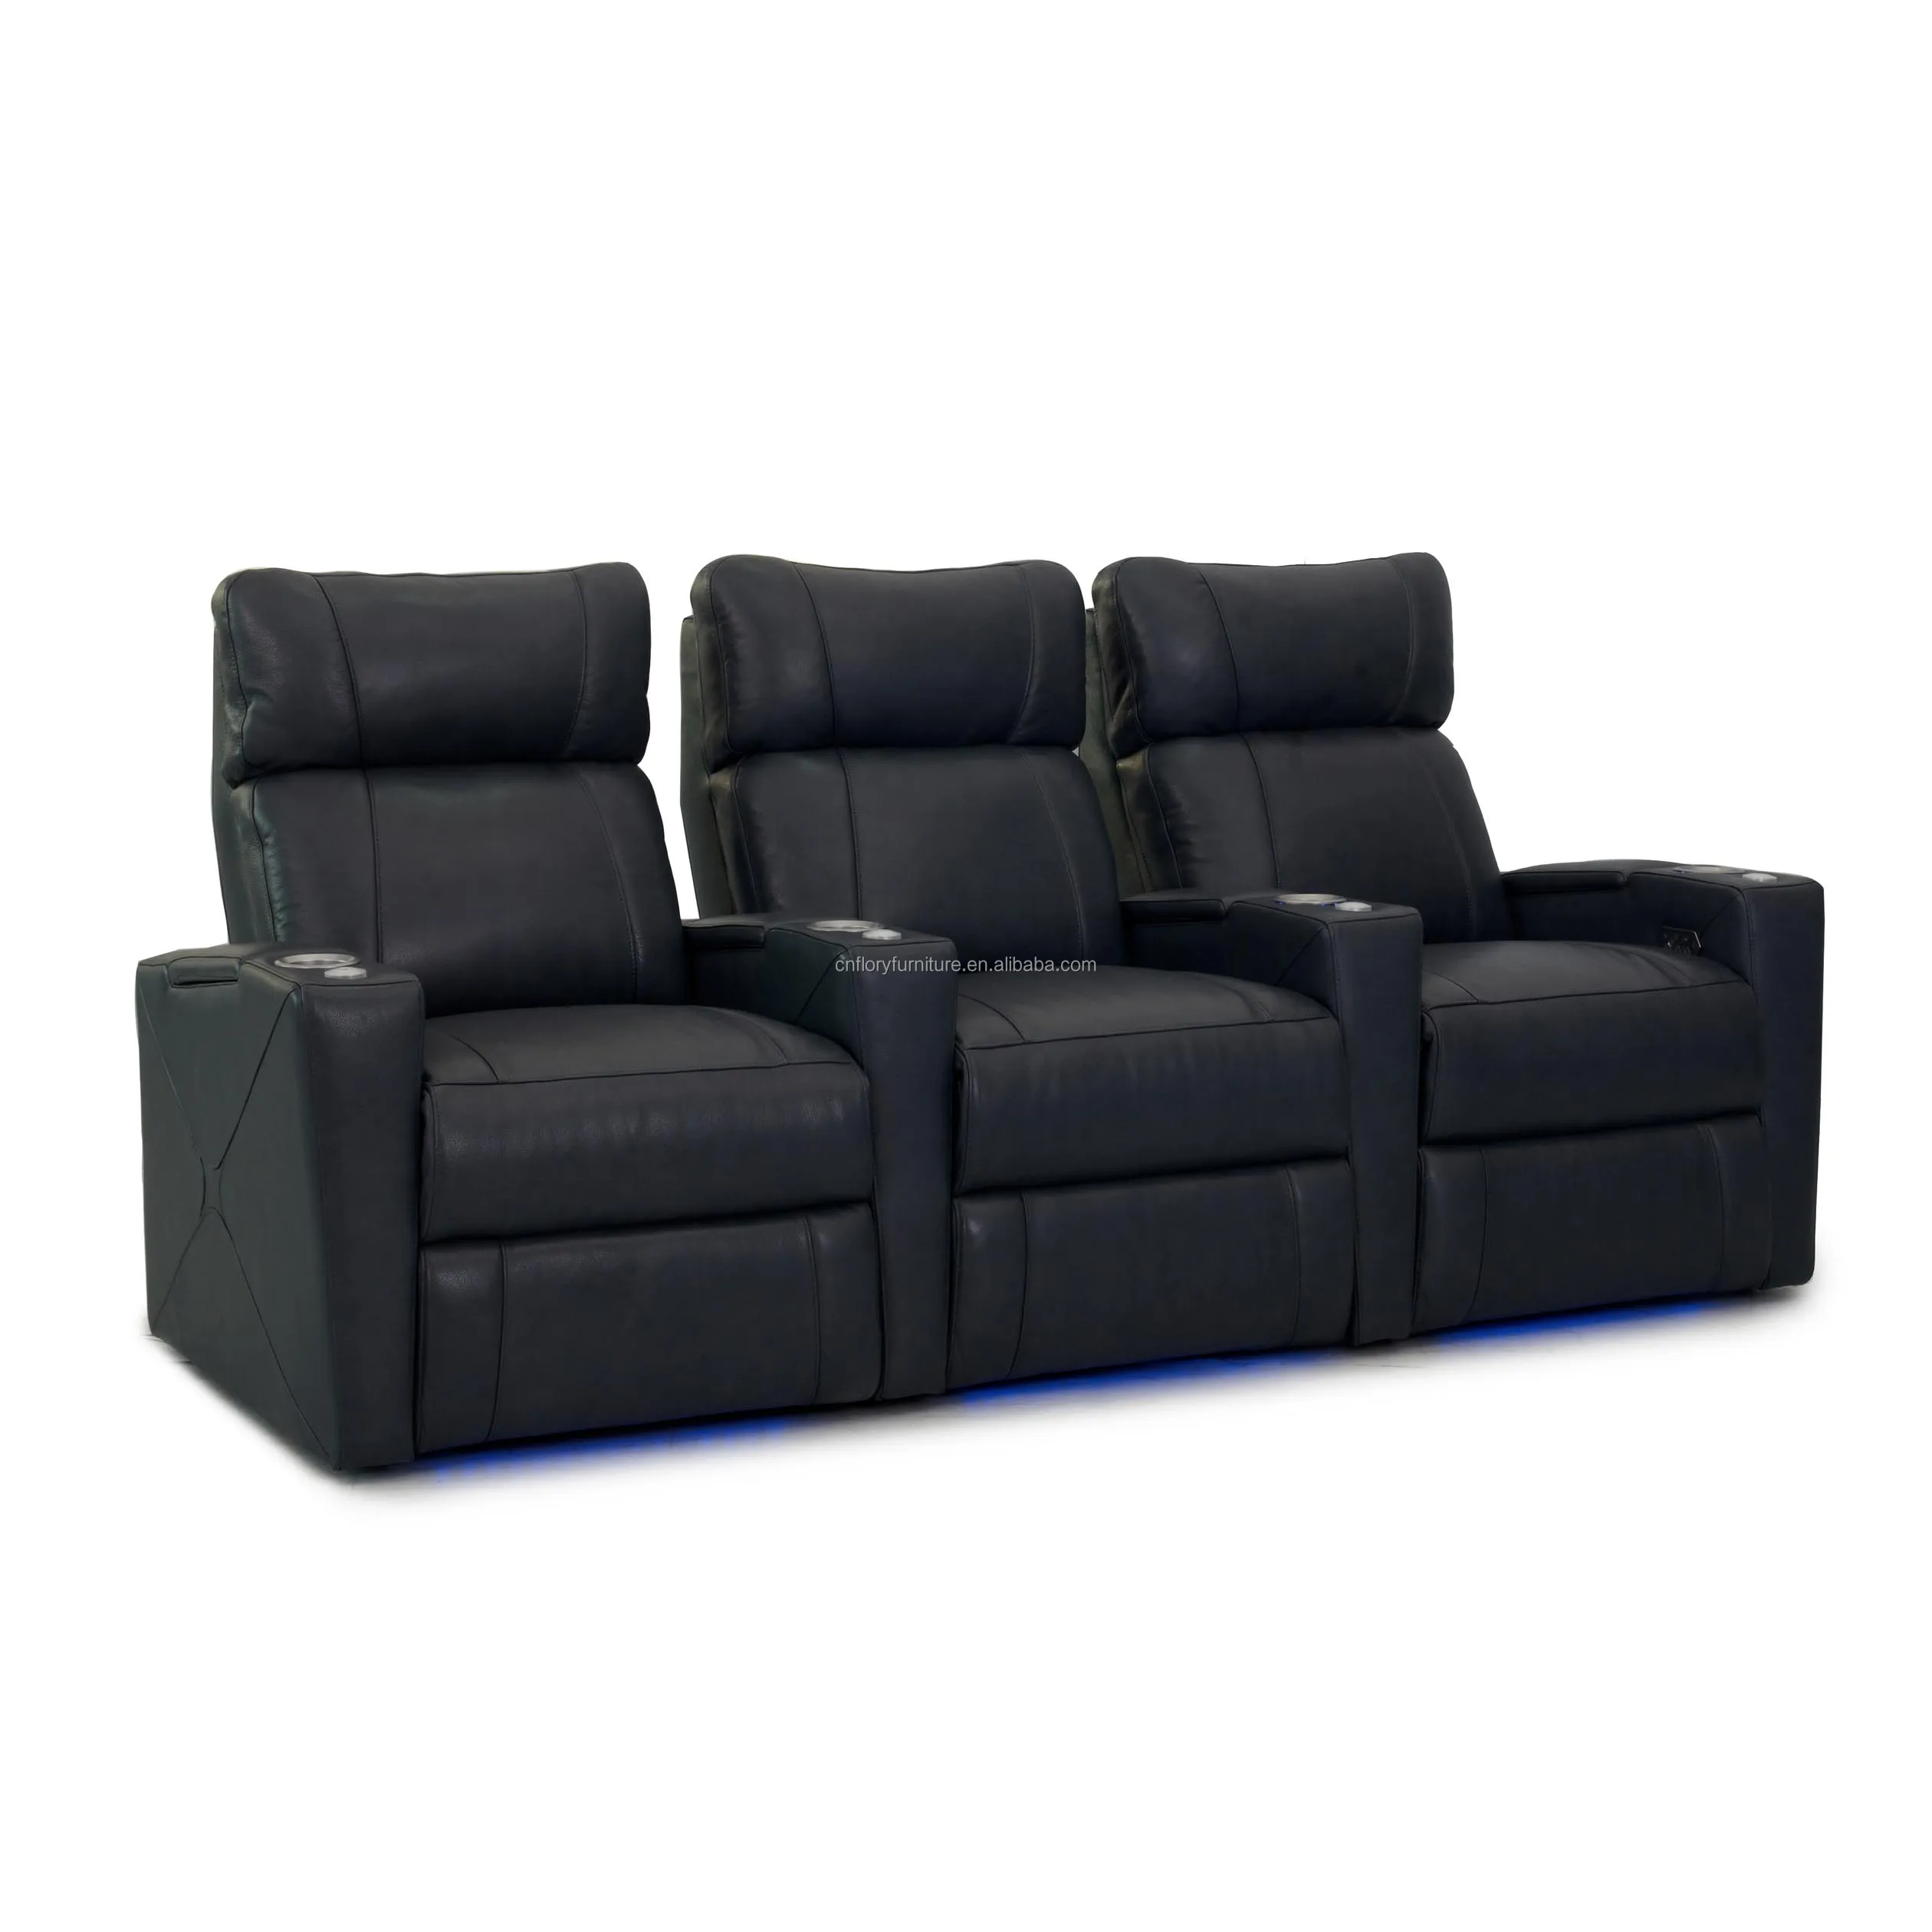 

VIP cinema home theater Comfort stretch Electric recliner sofa